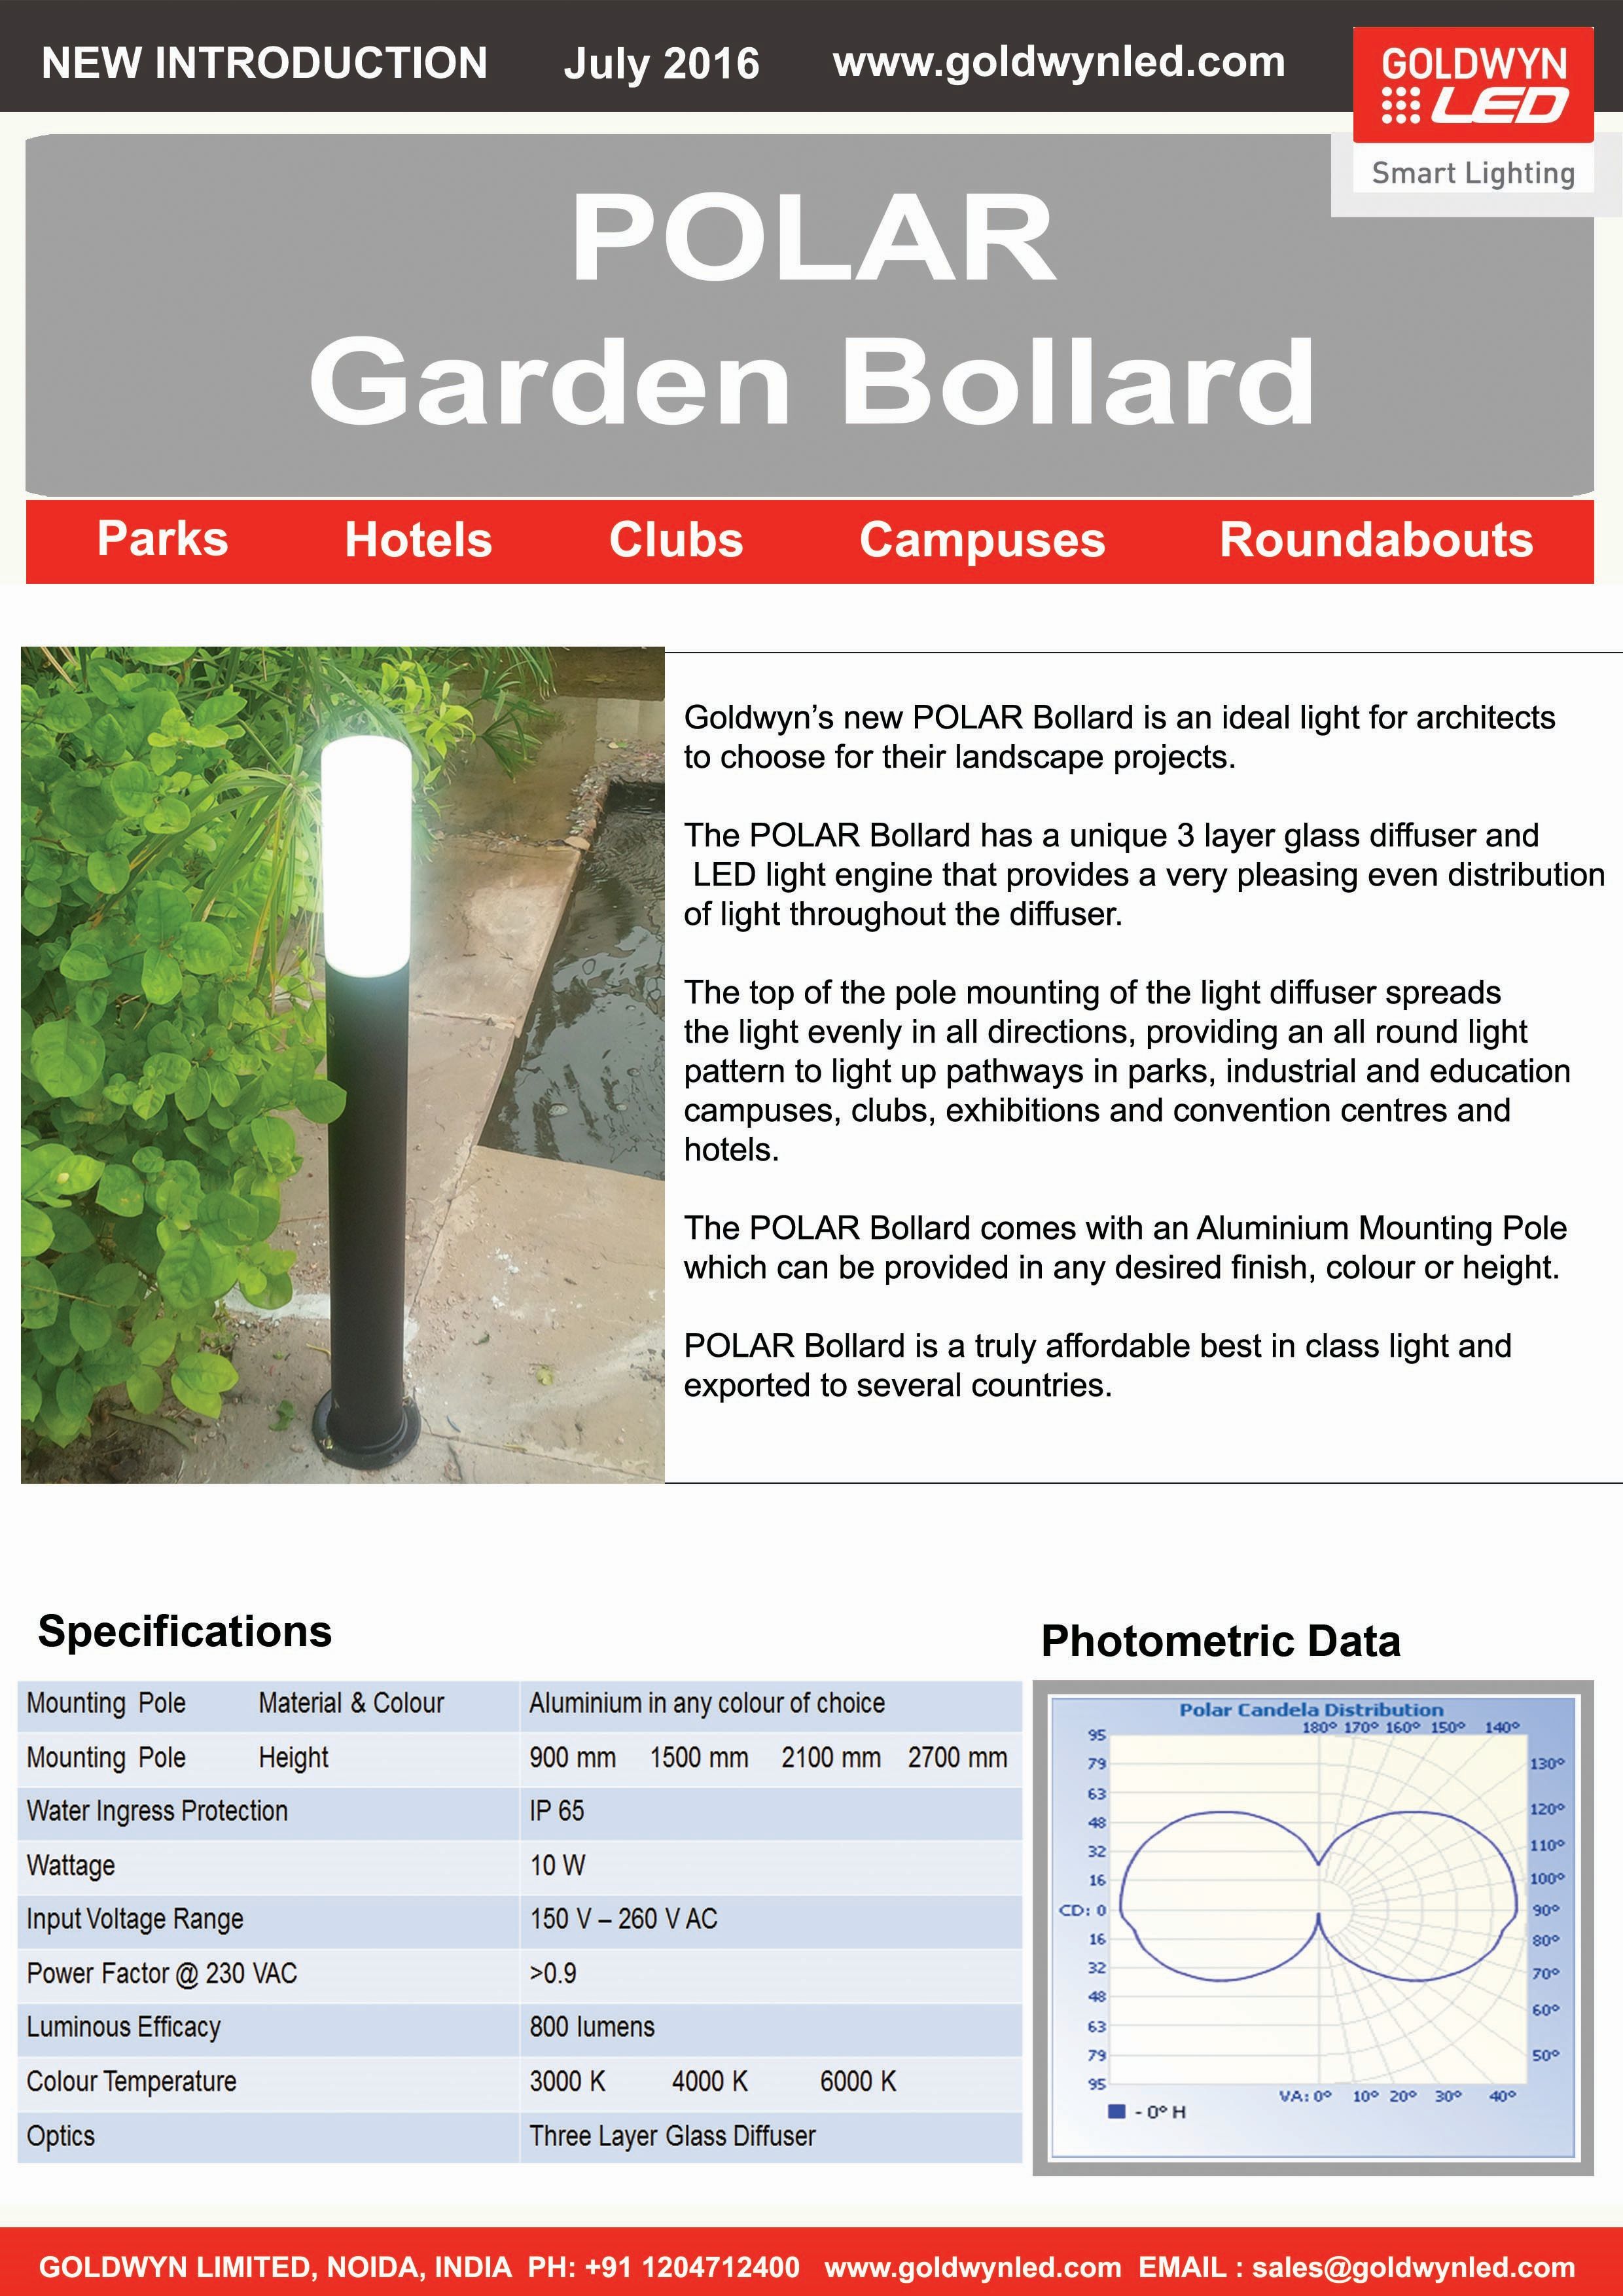 POLAR Garden Bollard